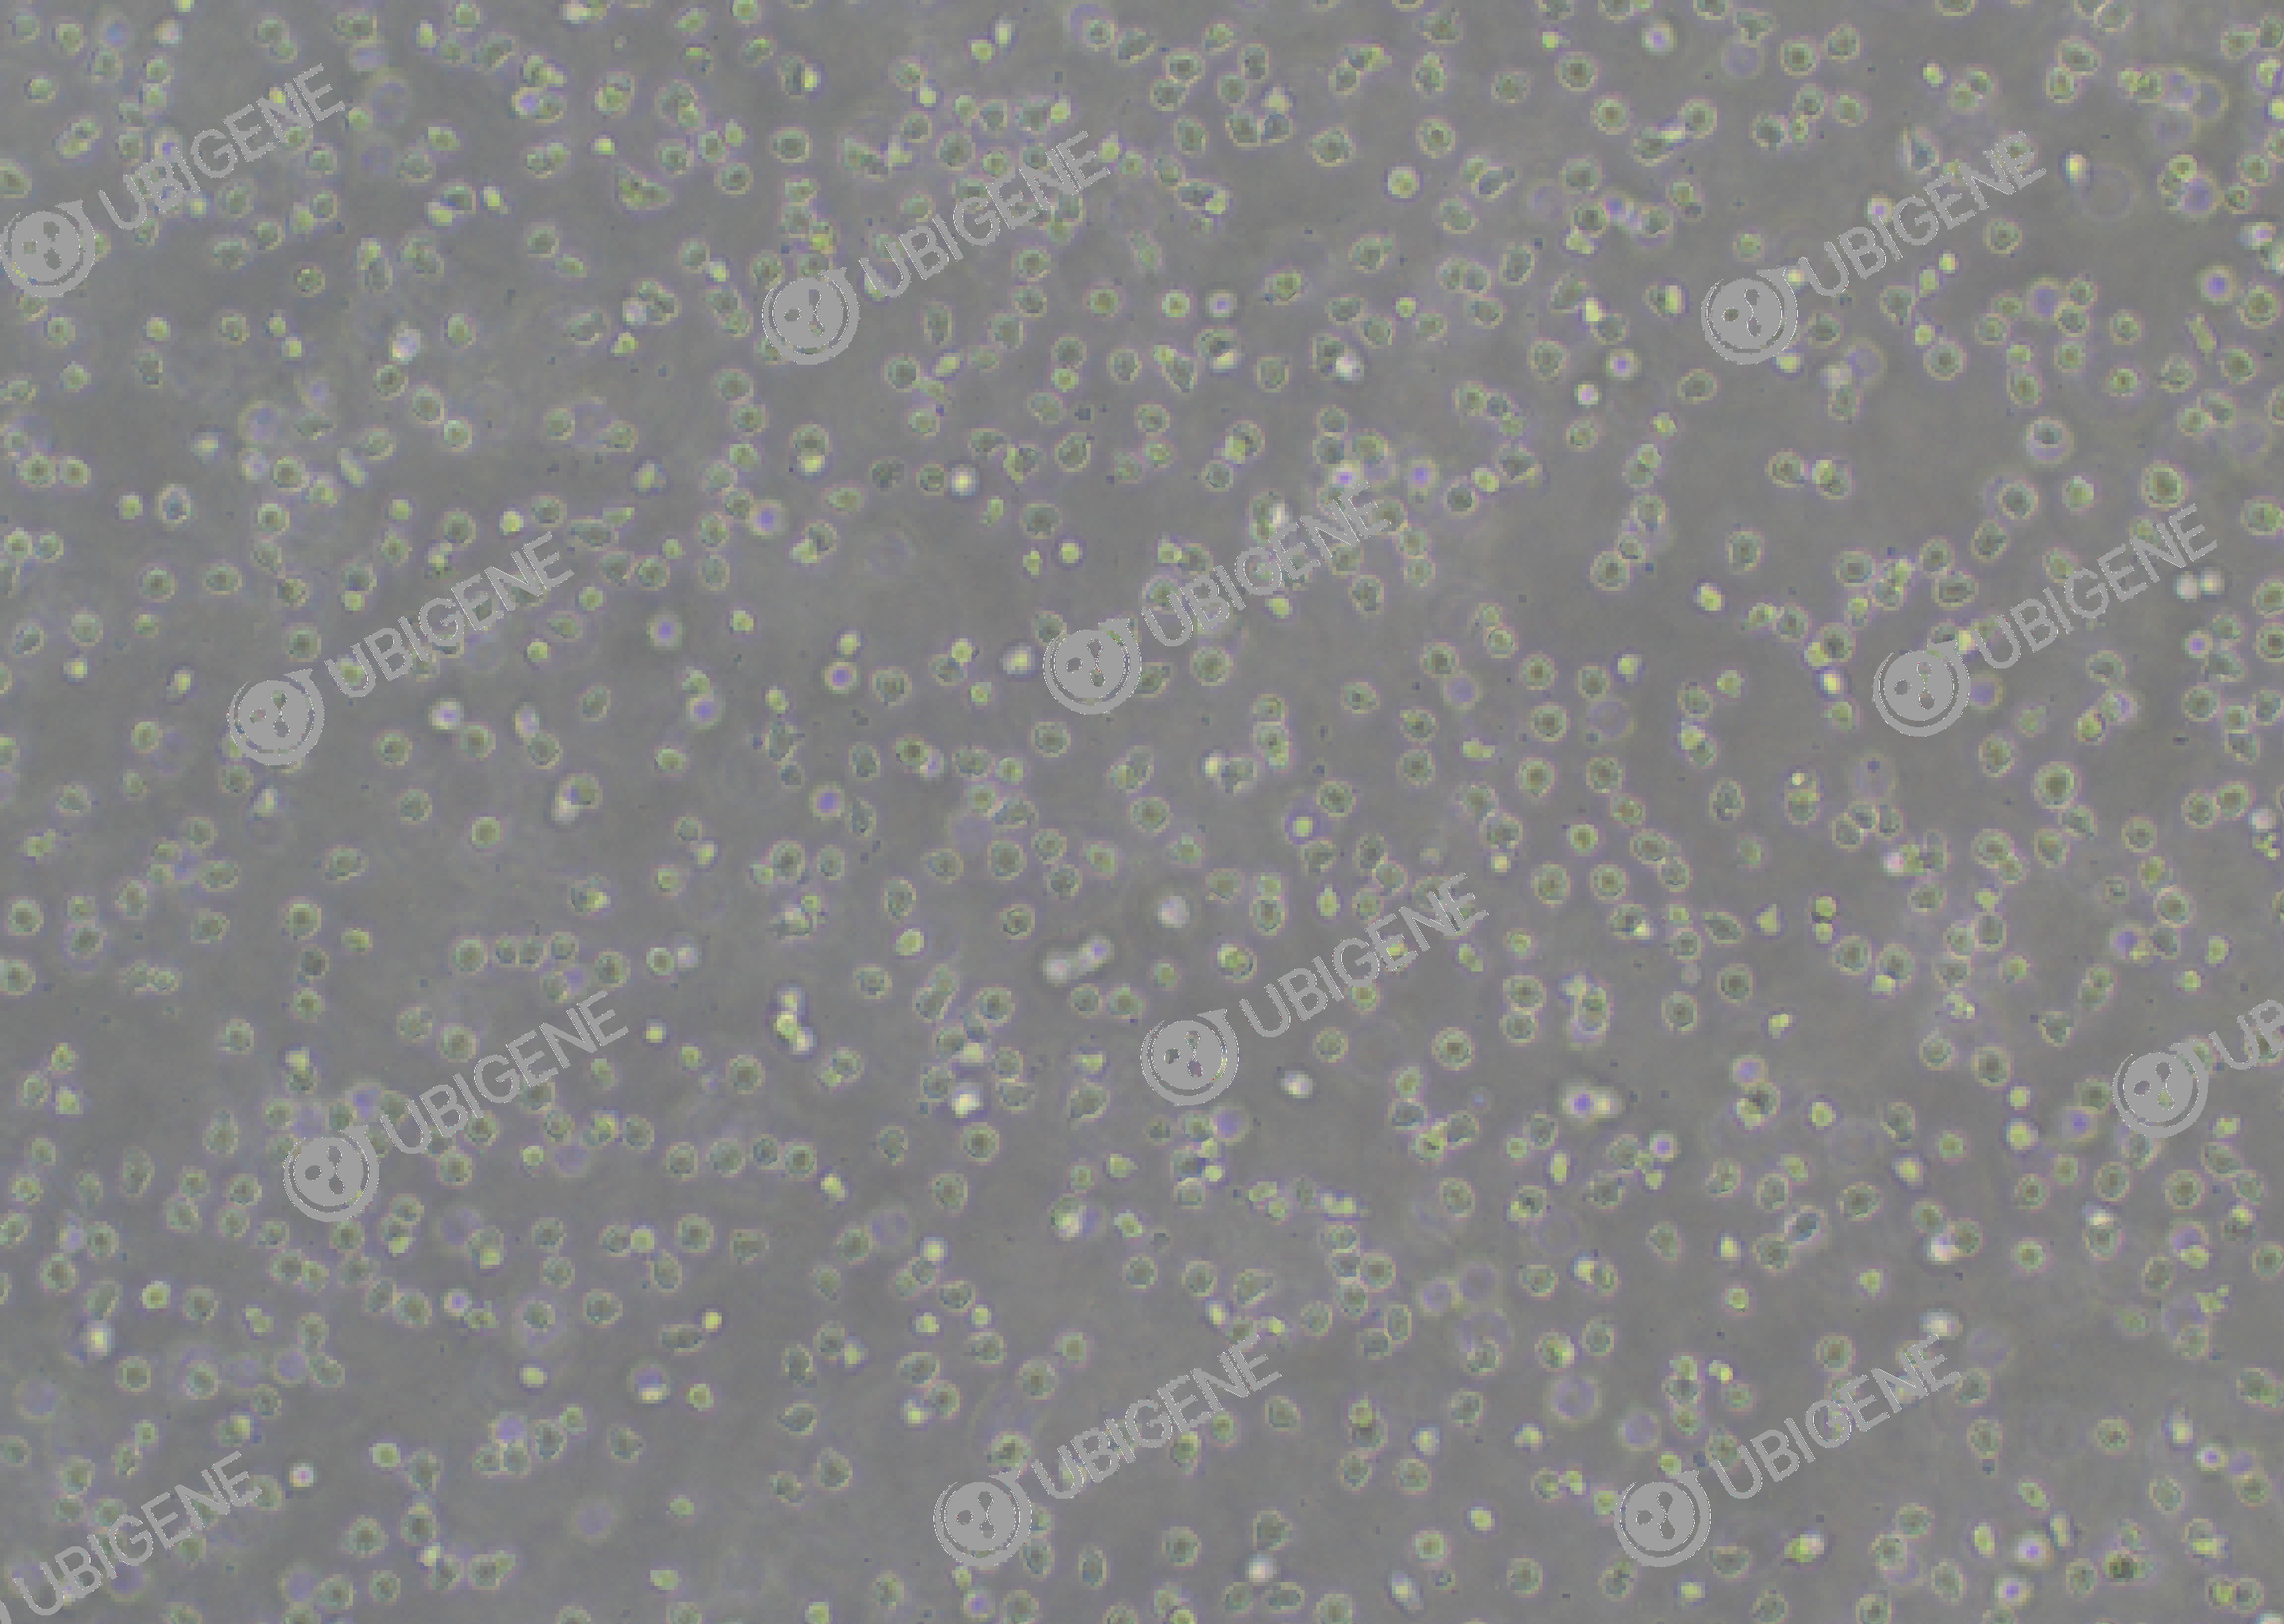 U-937 cell line Cultured cell morphology